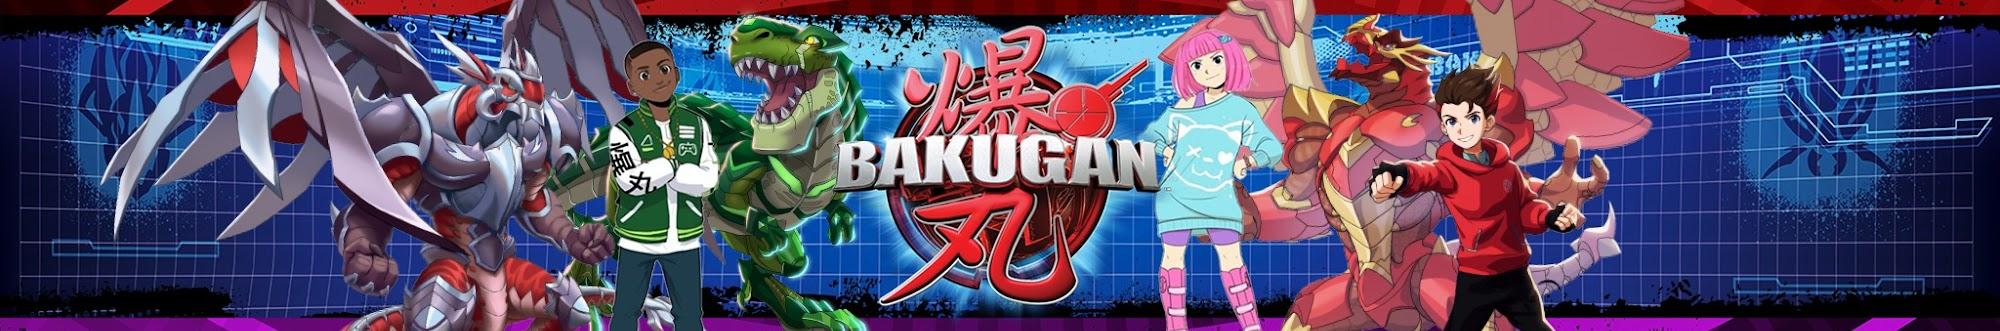 Bakugan Official Channel